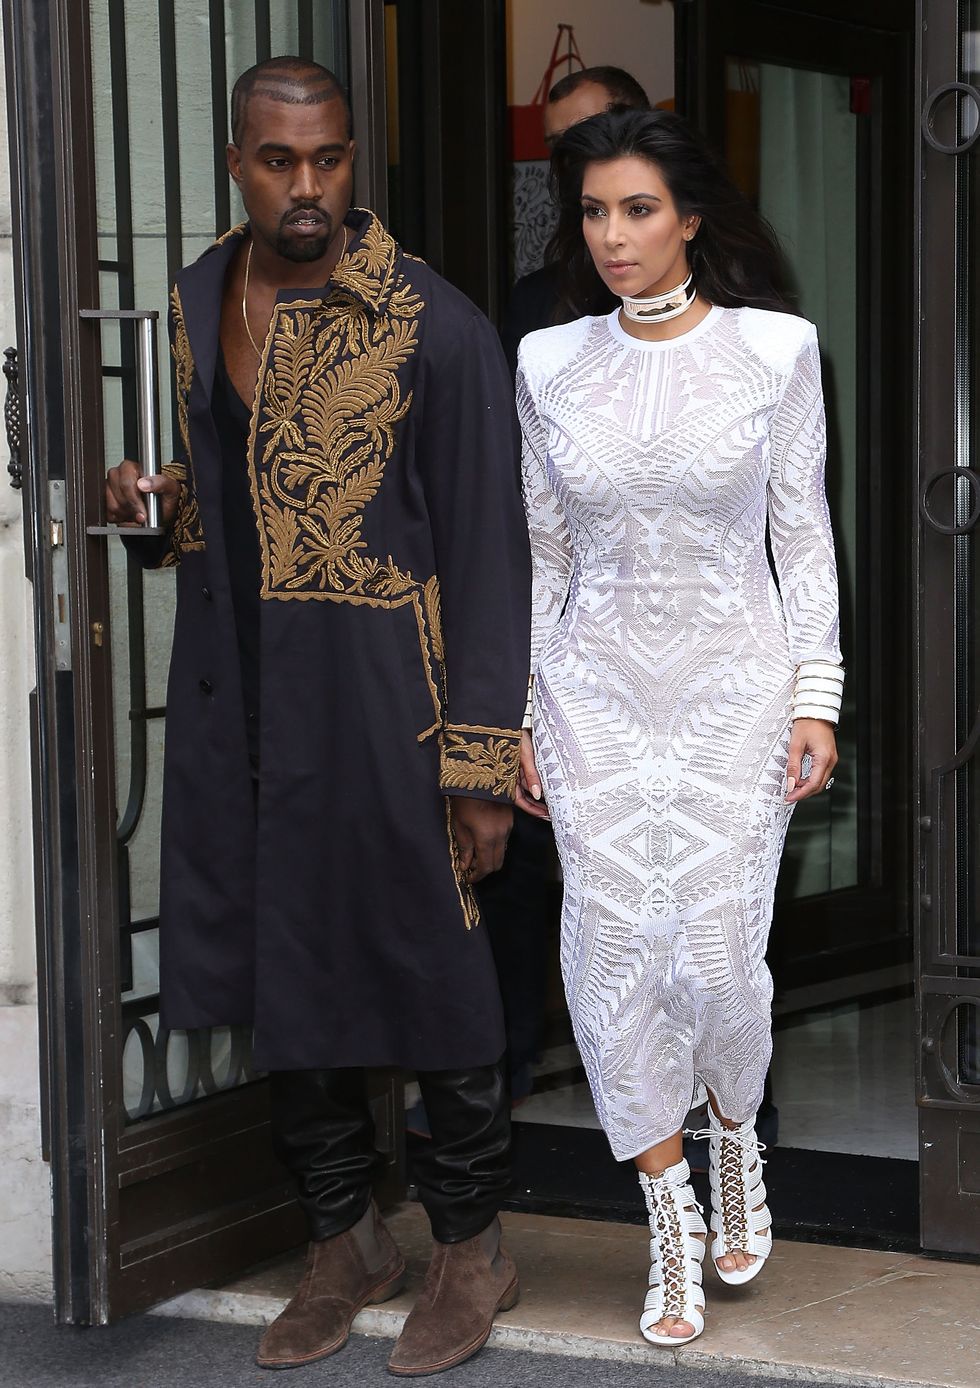 Kanye West and Kim Kardashian arriving at the Balmain Spring 2015 show